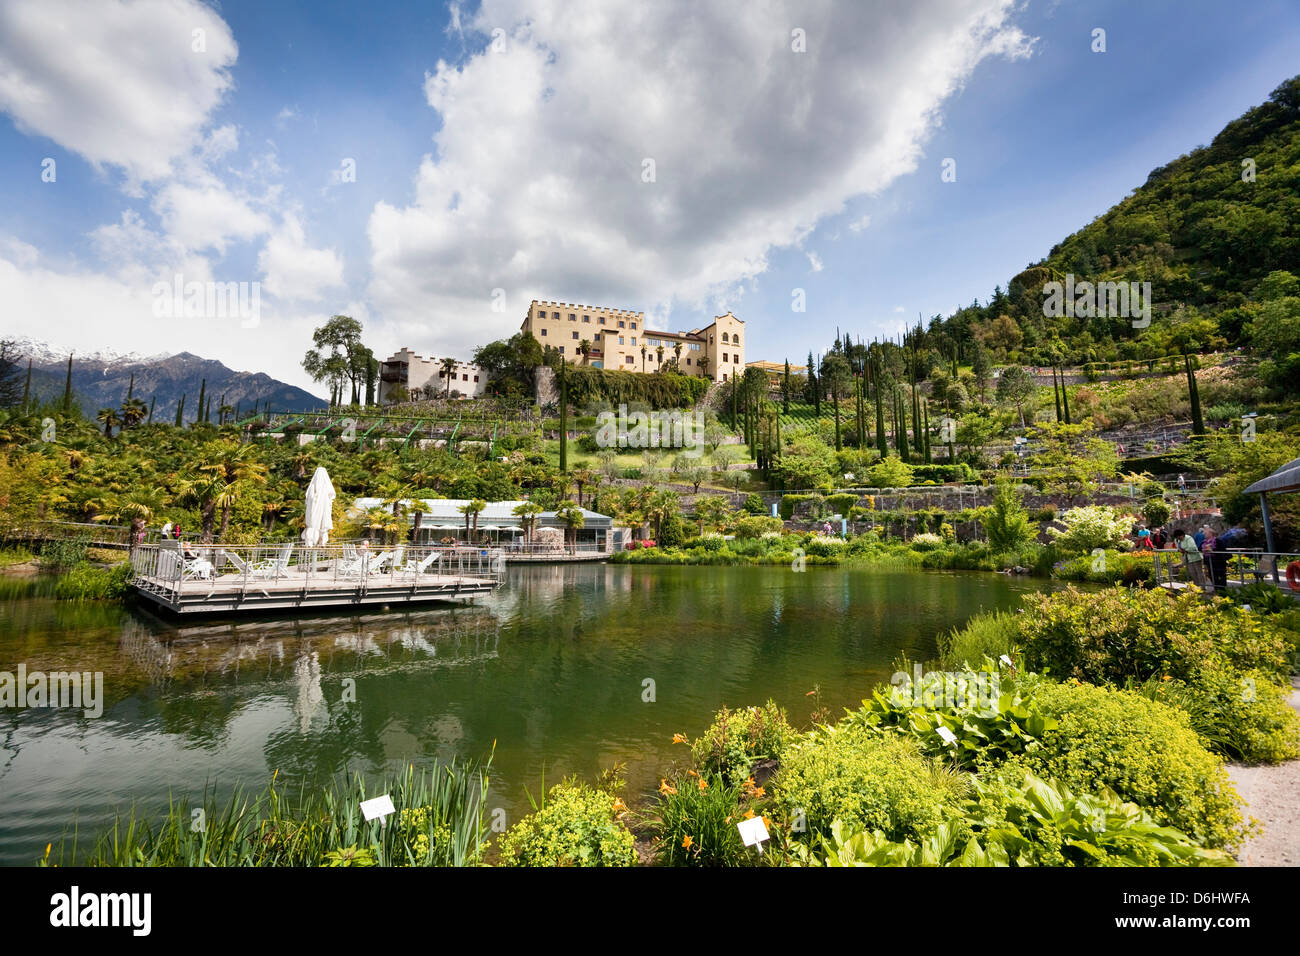 Eastern Alps, South Tyrol, Italy. The gardens of Schloss Trauttmansdorff. Stock Photo